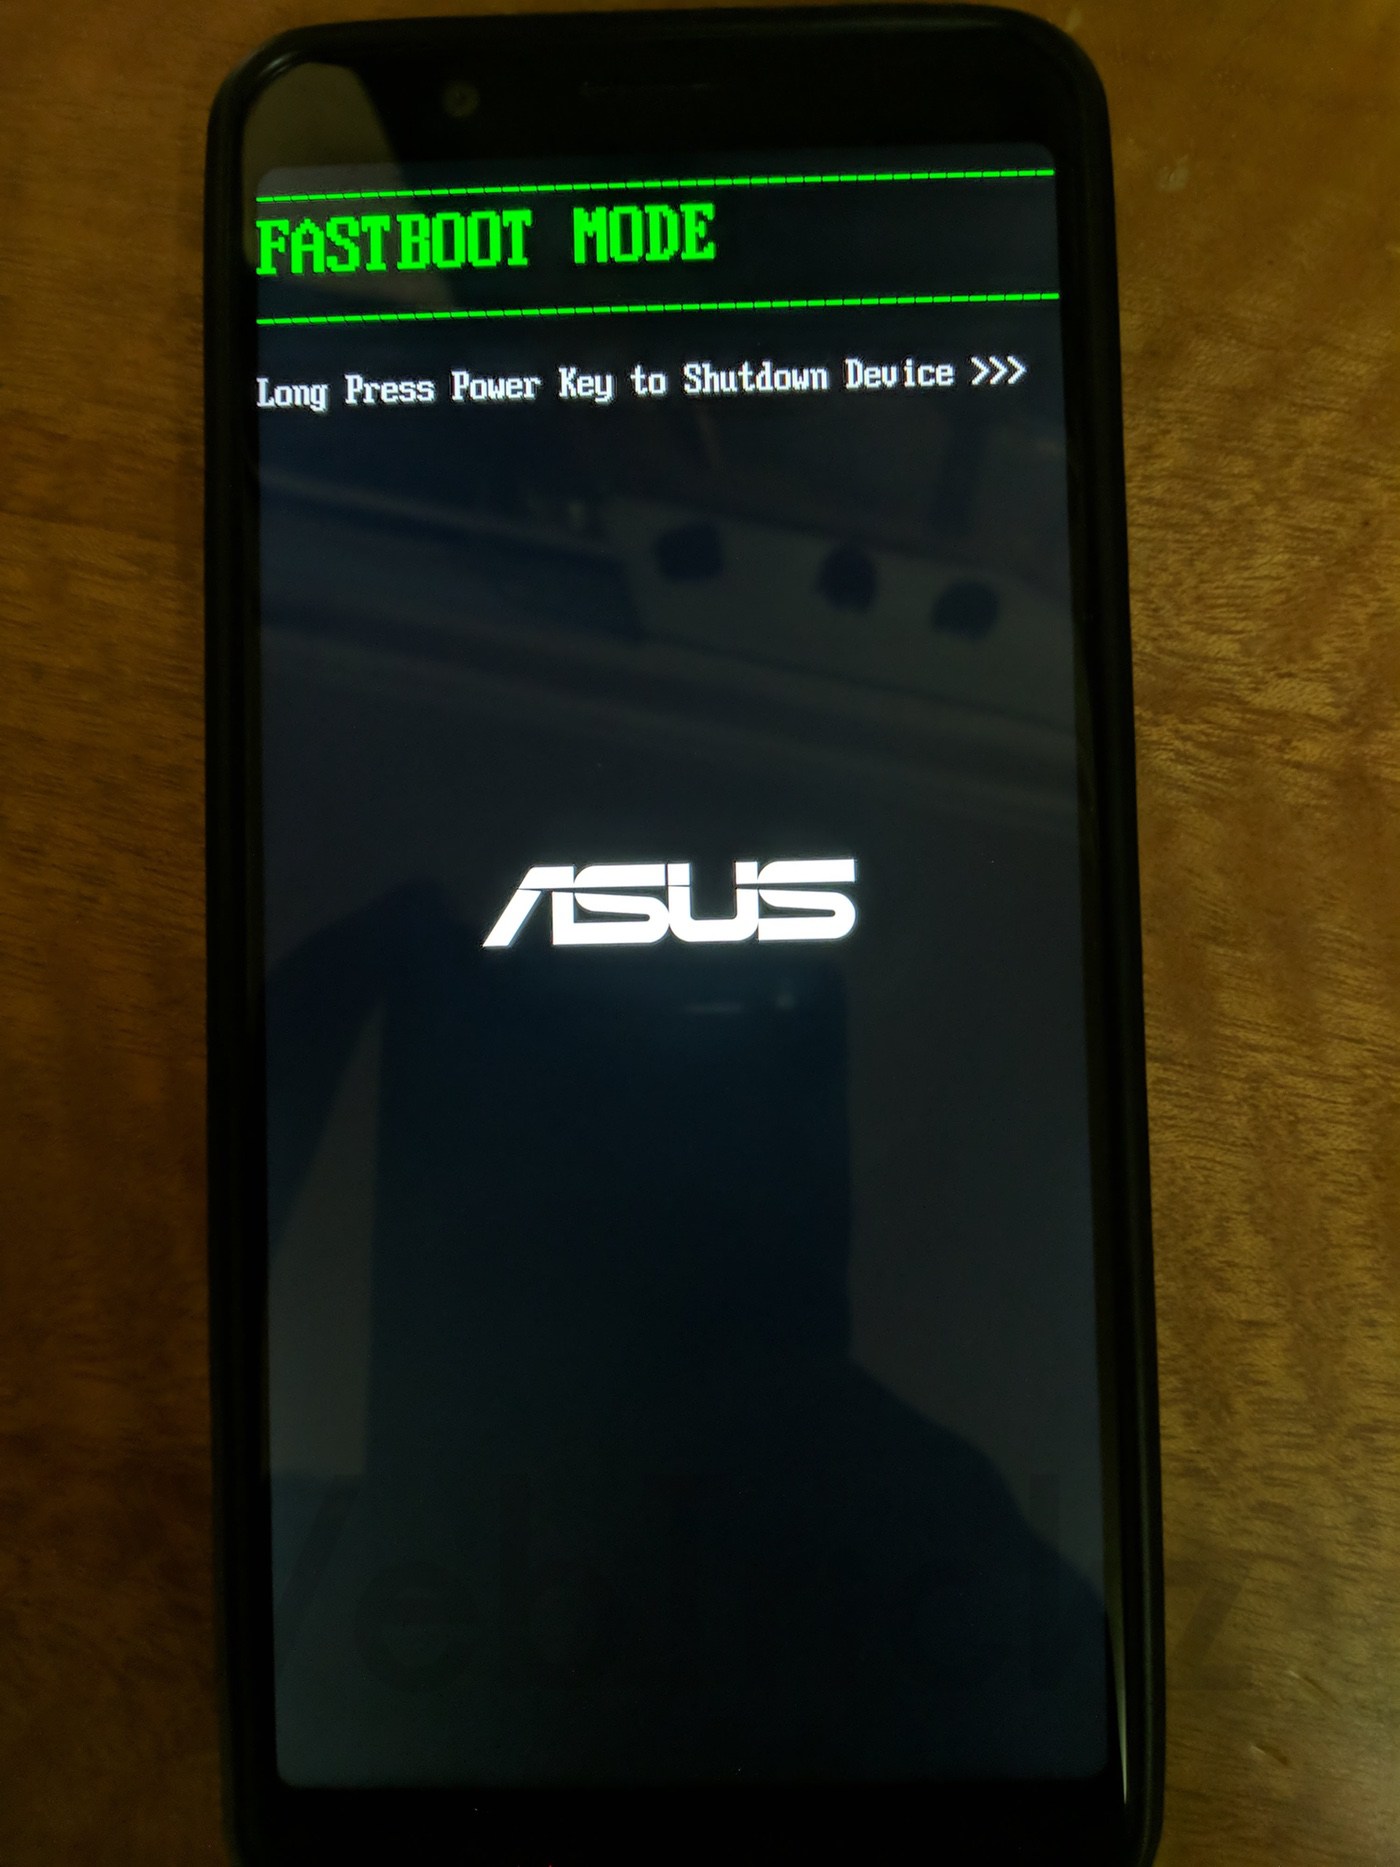 Boot ASUS Zenfone 8 in Fastboot Mode